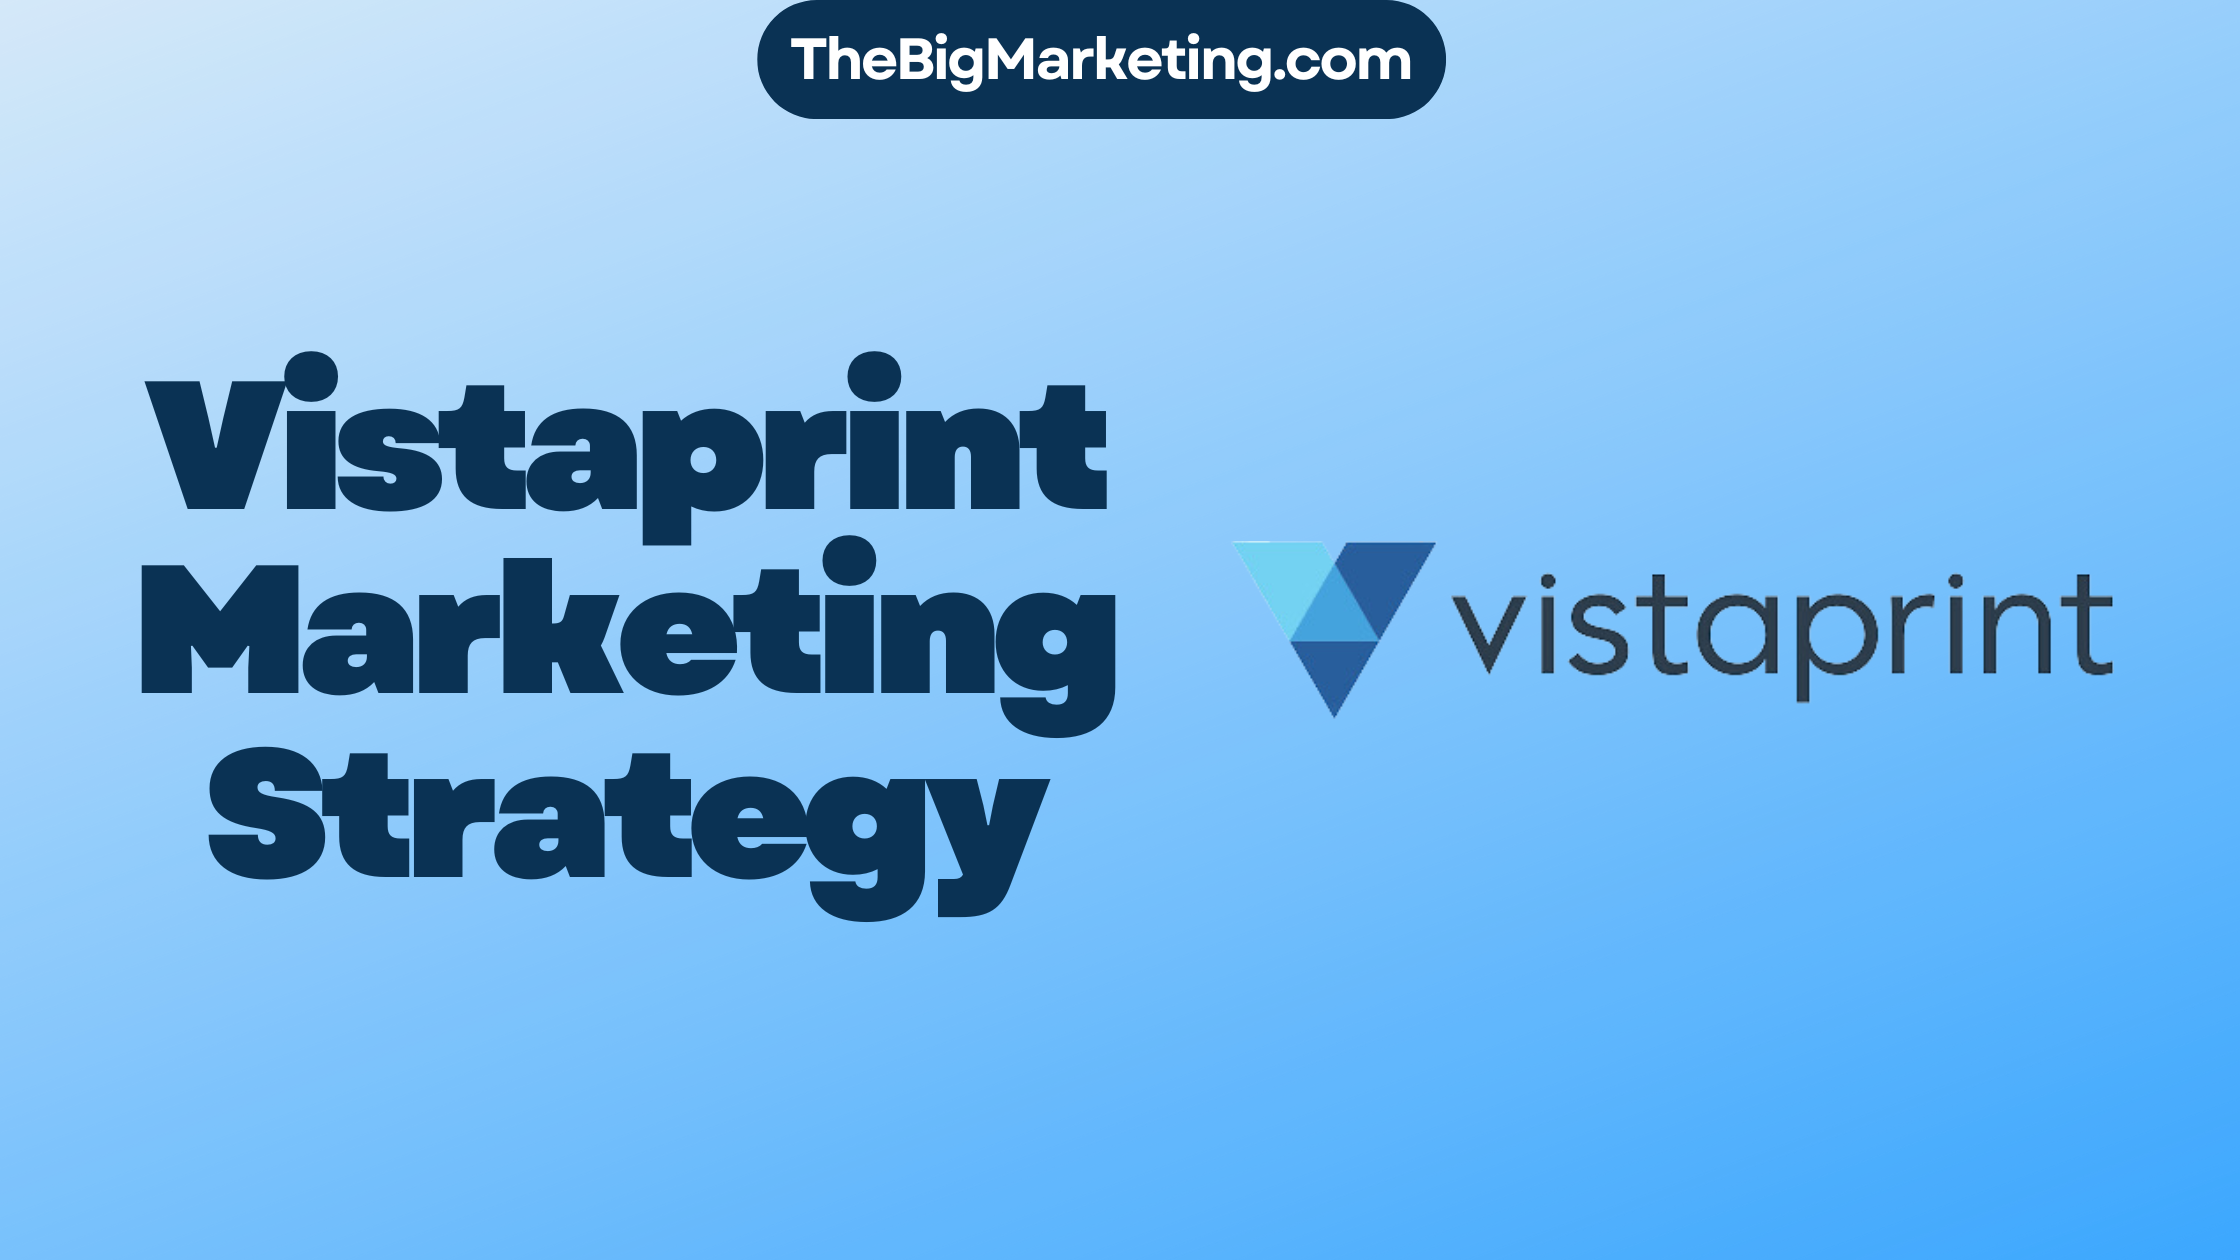 Vistaprint Marketing Strategy